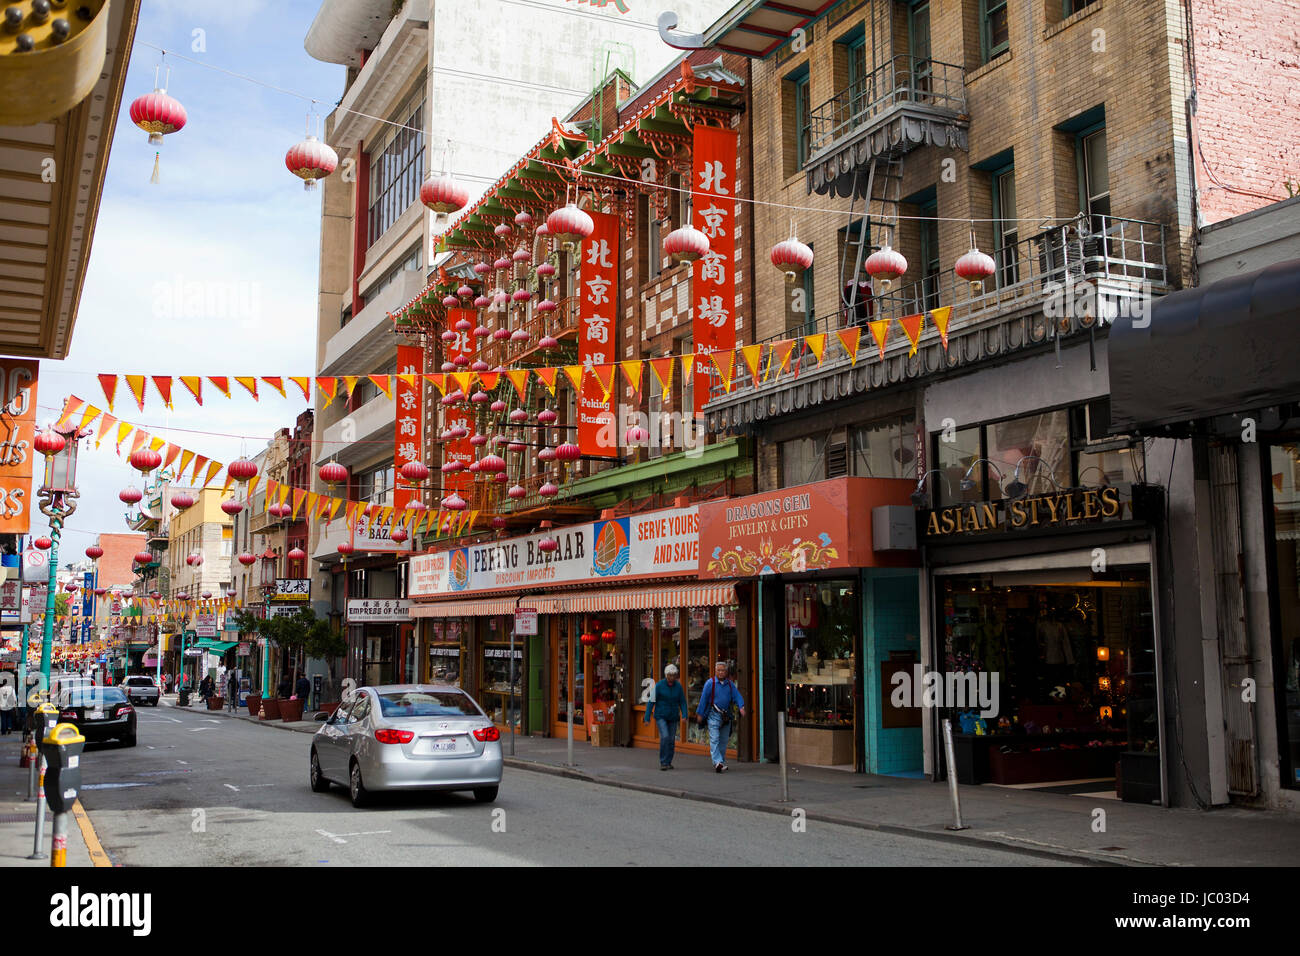 Grant Avenue, Chinatown street scene - San Francisco, California USA Stock Photo